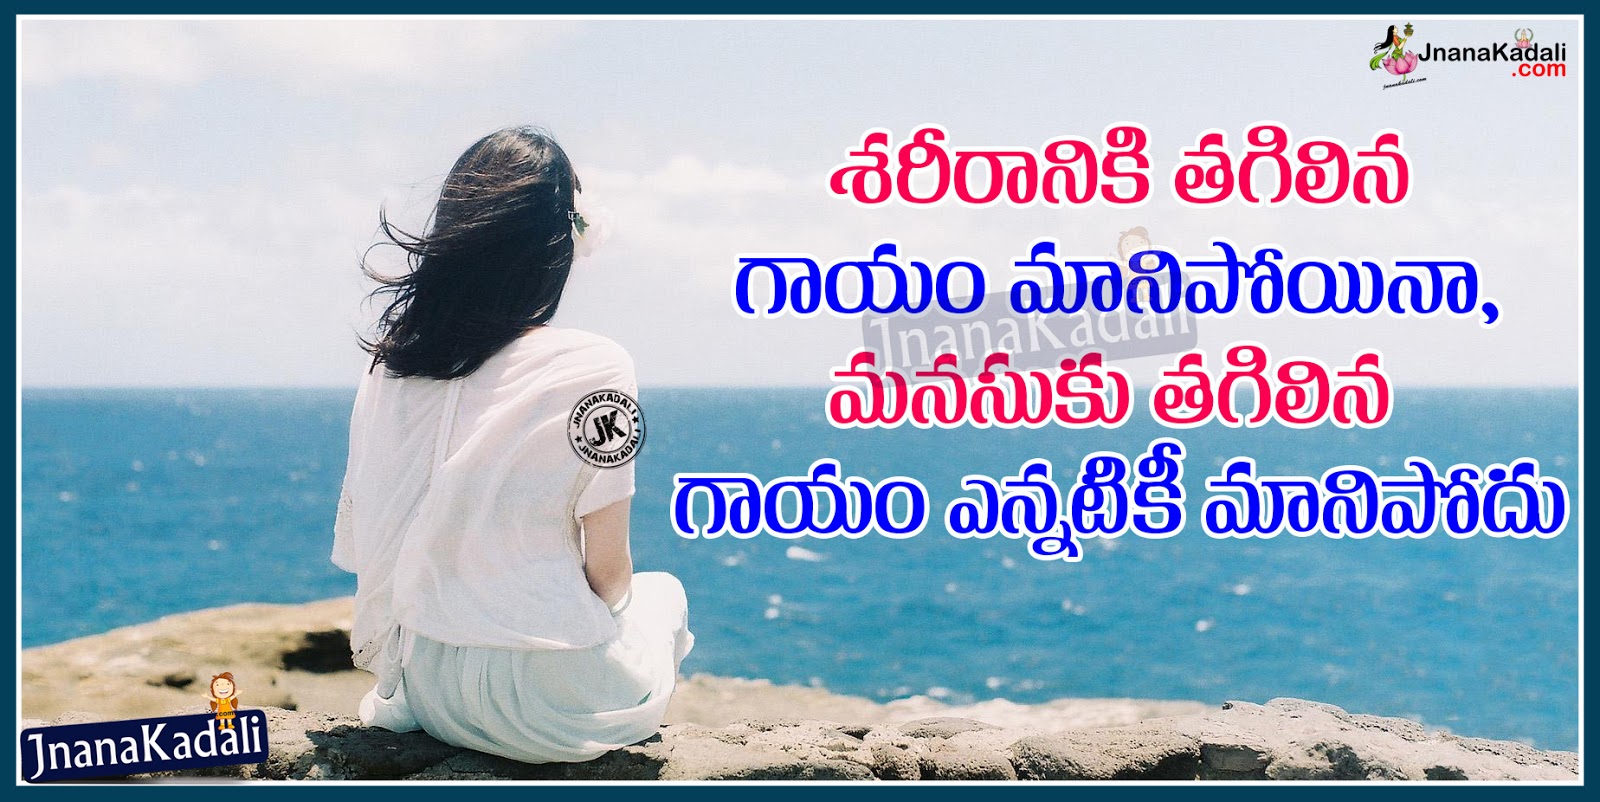 January 2019 JNANA KADALI COM Telugu  Quotes  English 